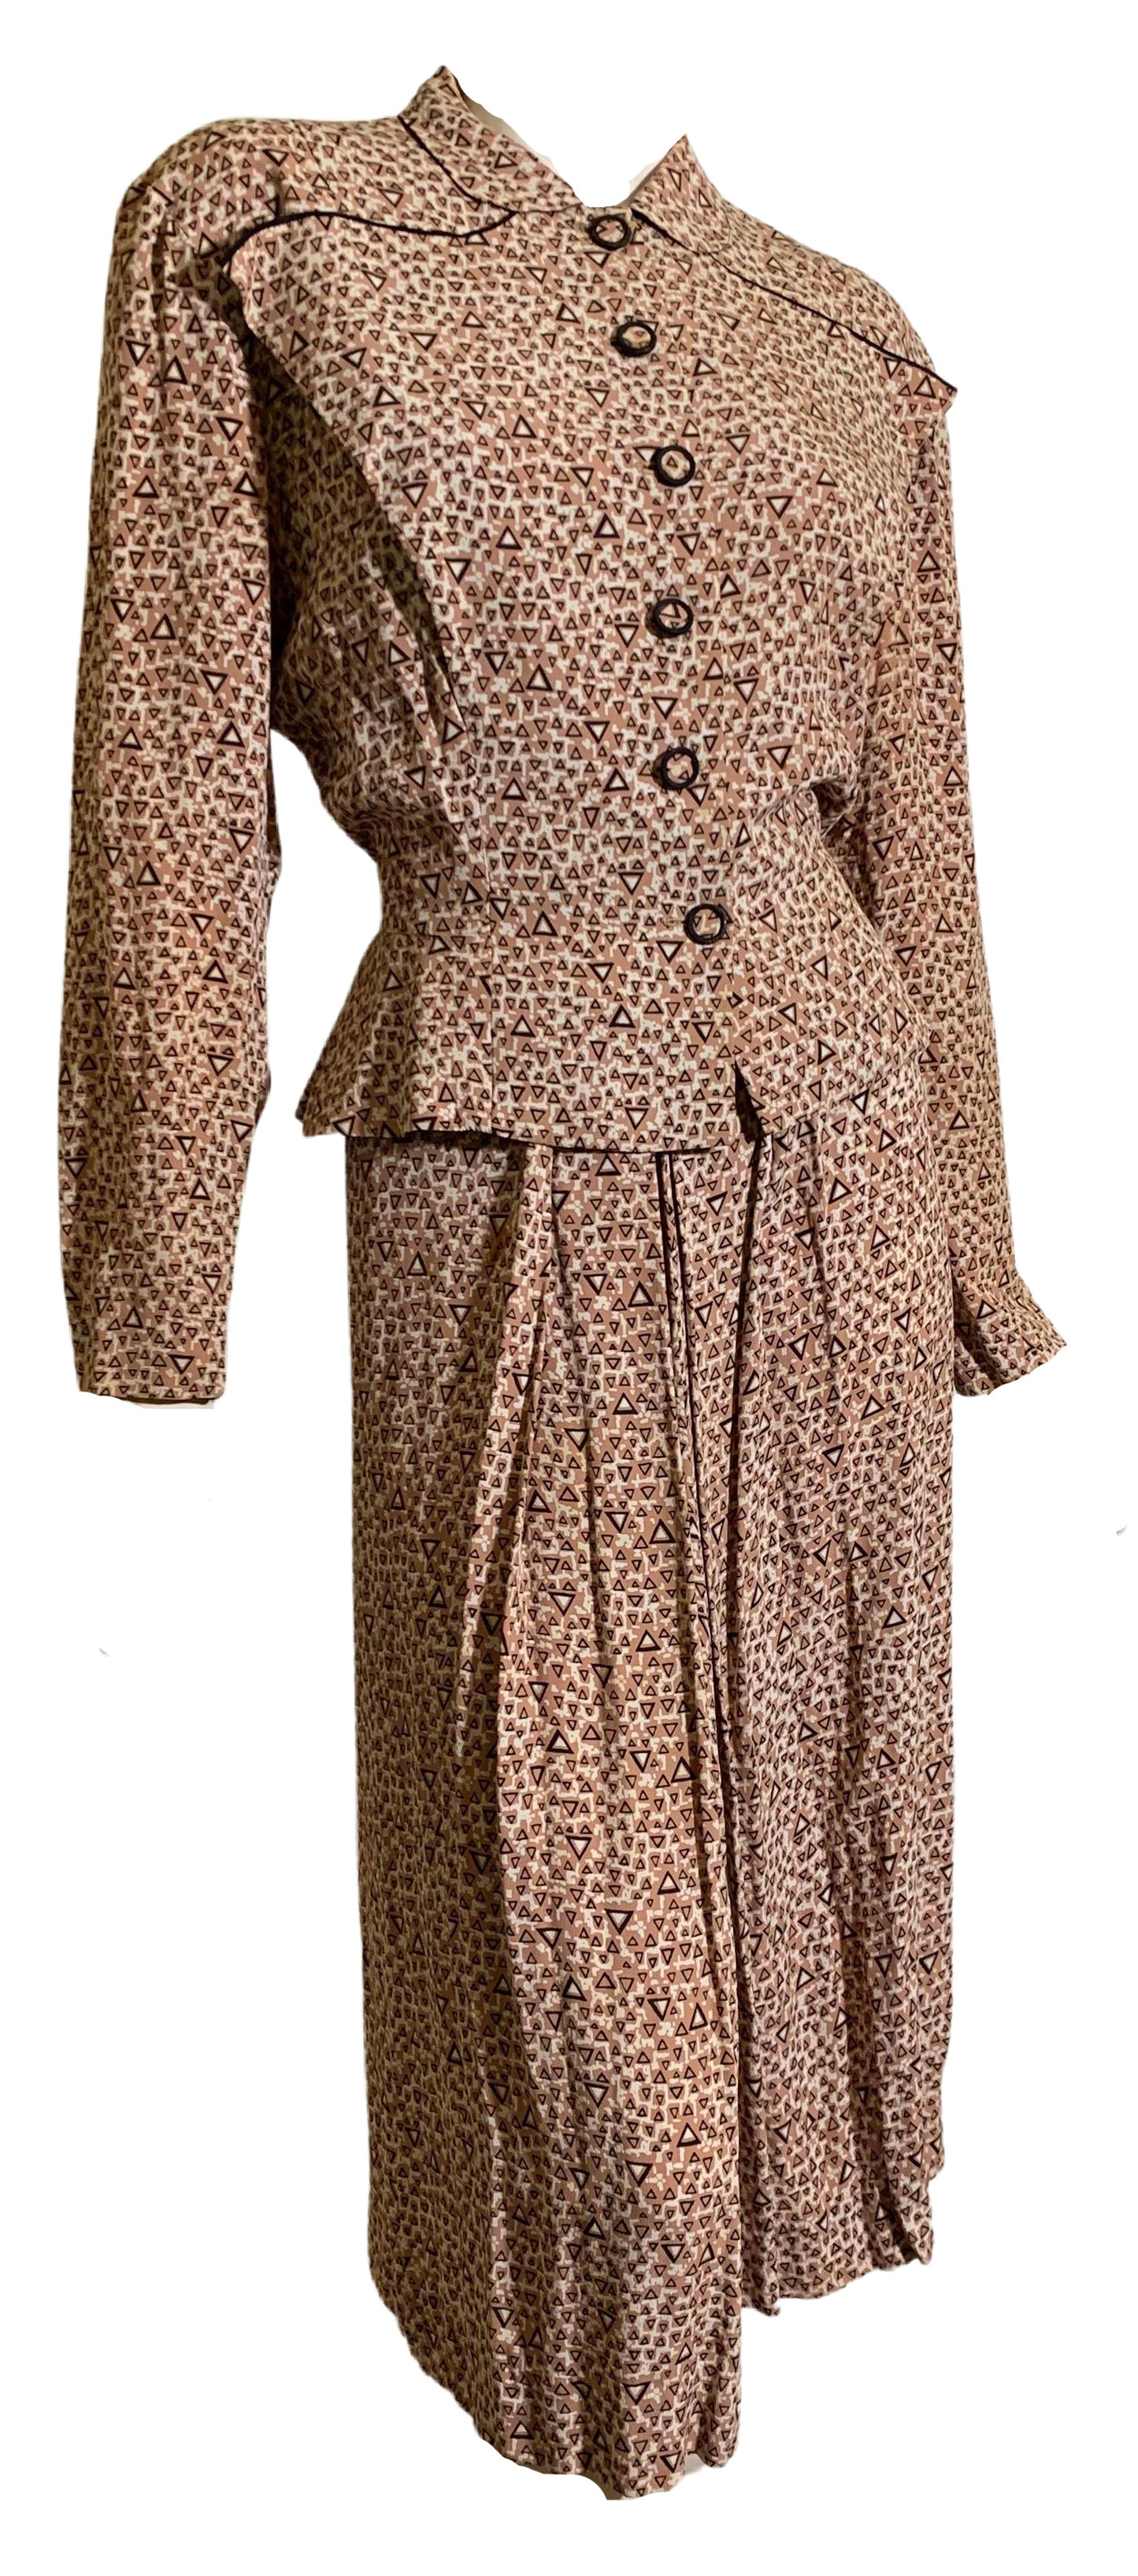 Smart Art Deco Geometric Print Rayon Dress and Jacket Set circa 1940s